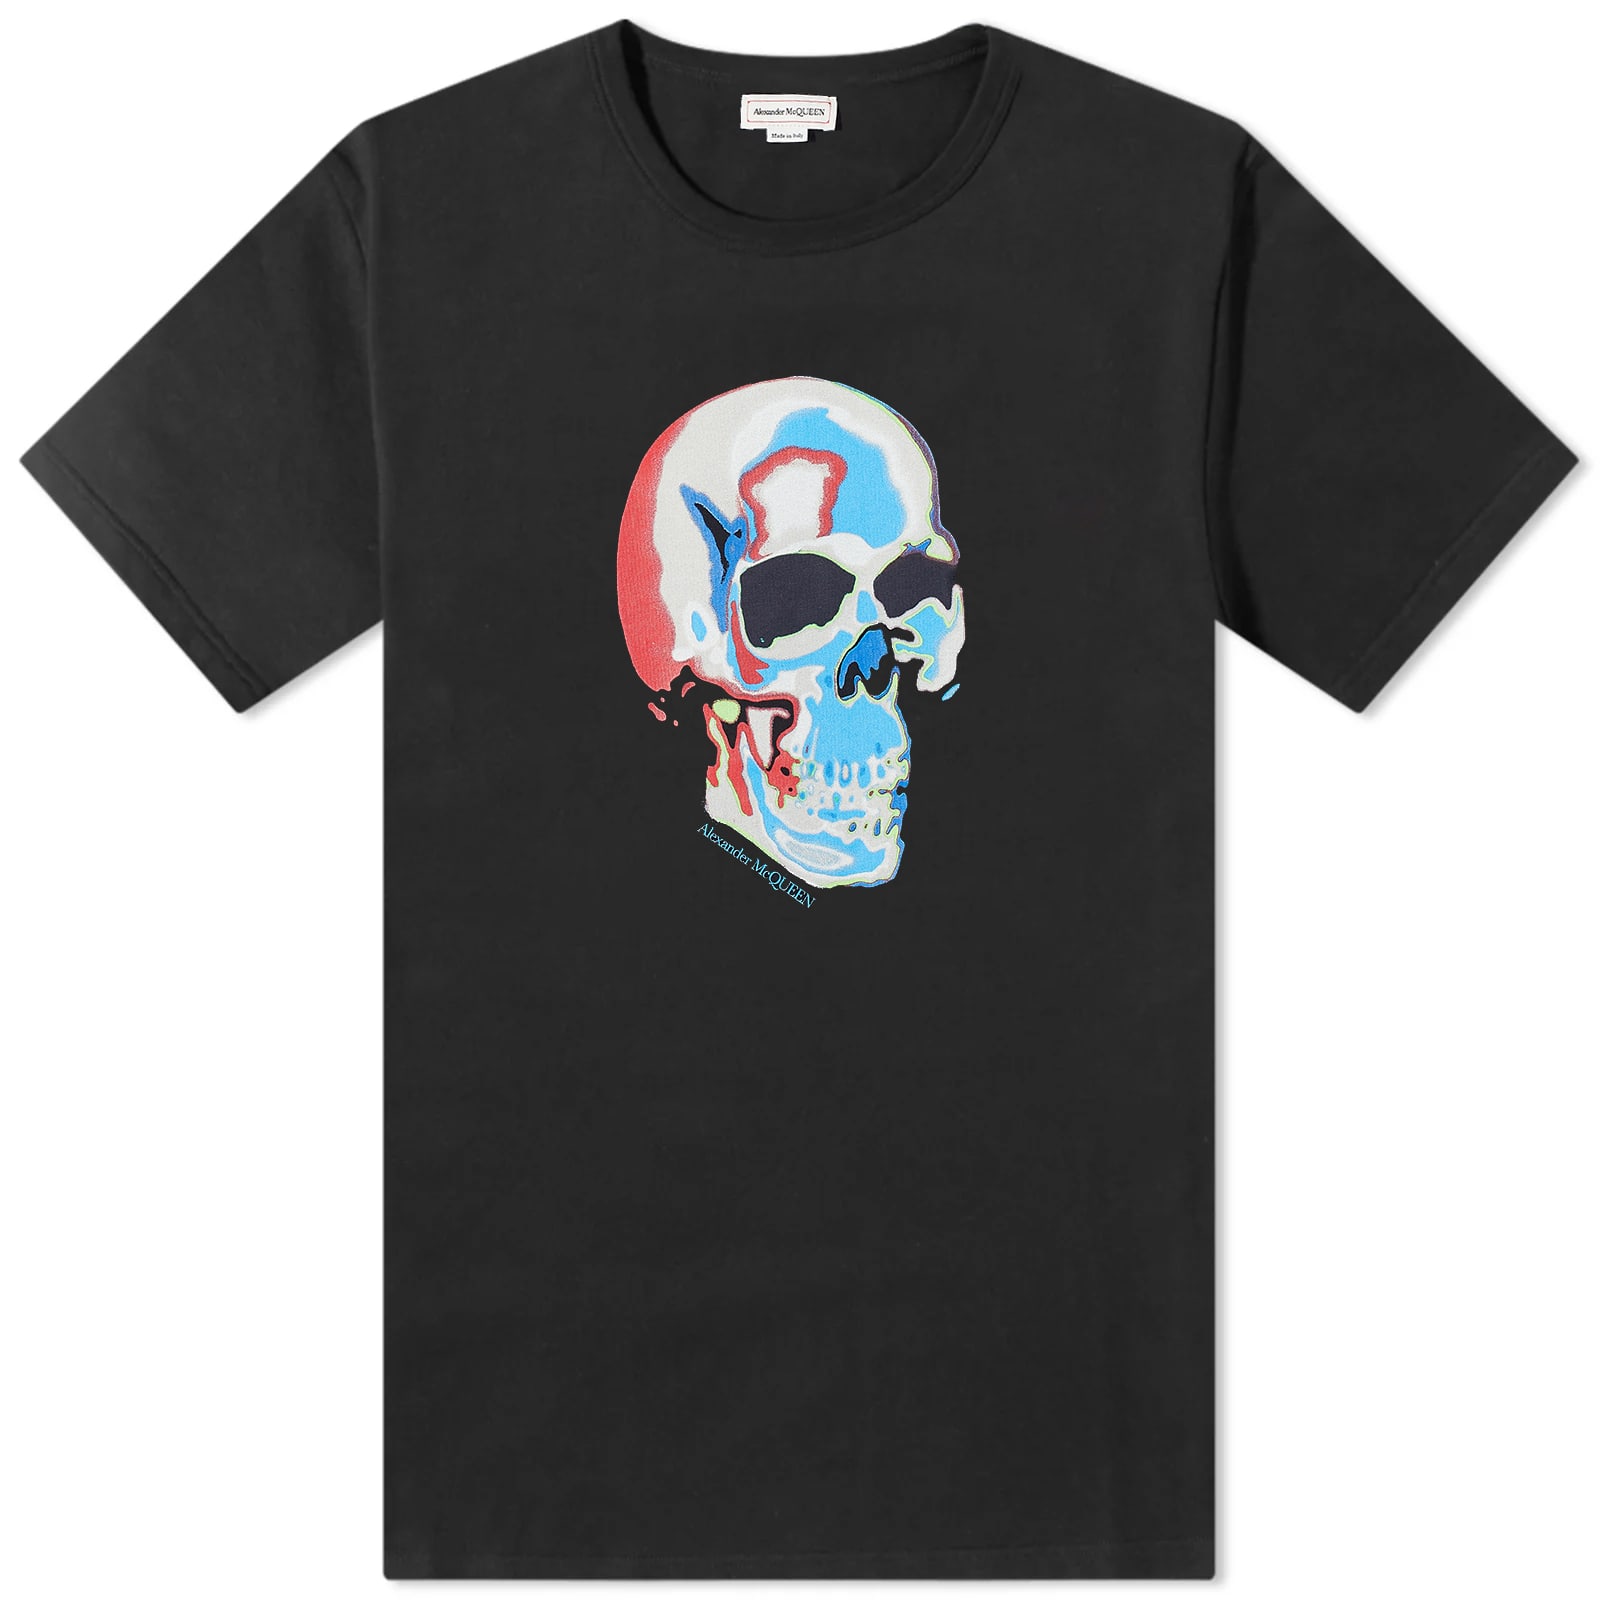 Футболка Alexander McQueen Solarized Skull Print, черный футболка alexander mcqueen solarized skull print черный